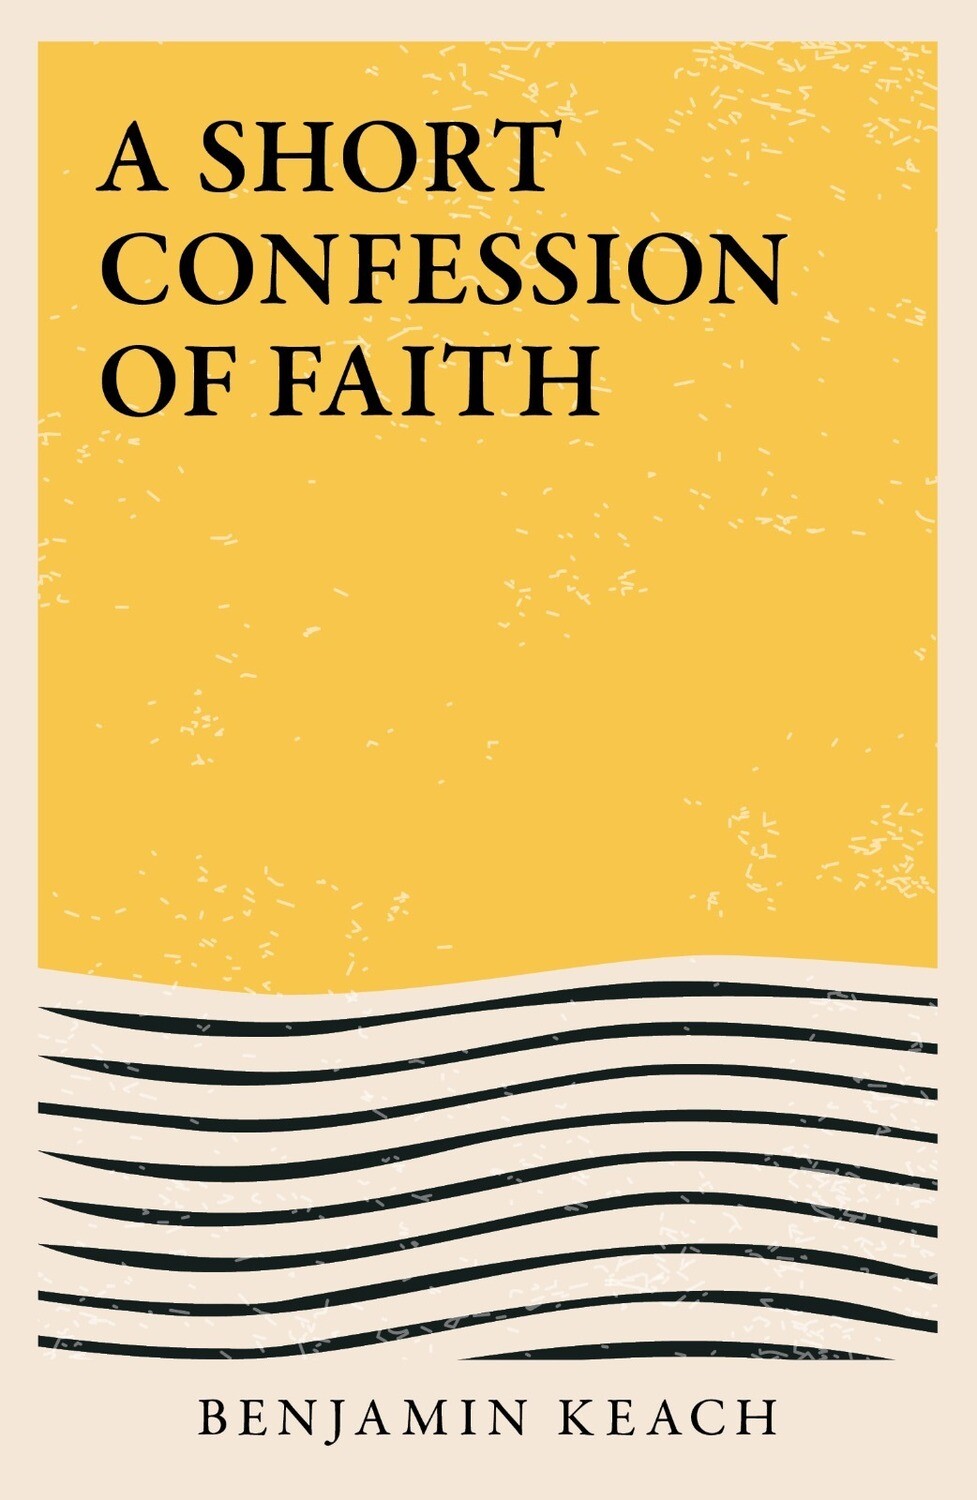 A Short Confession of Faith